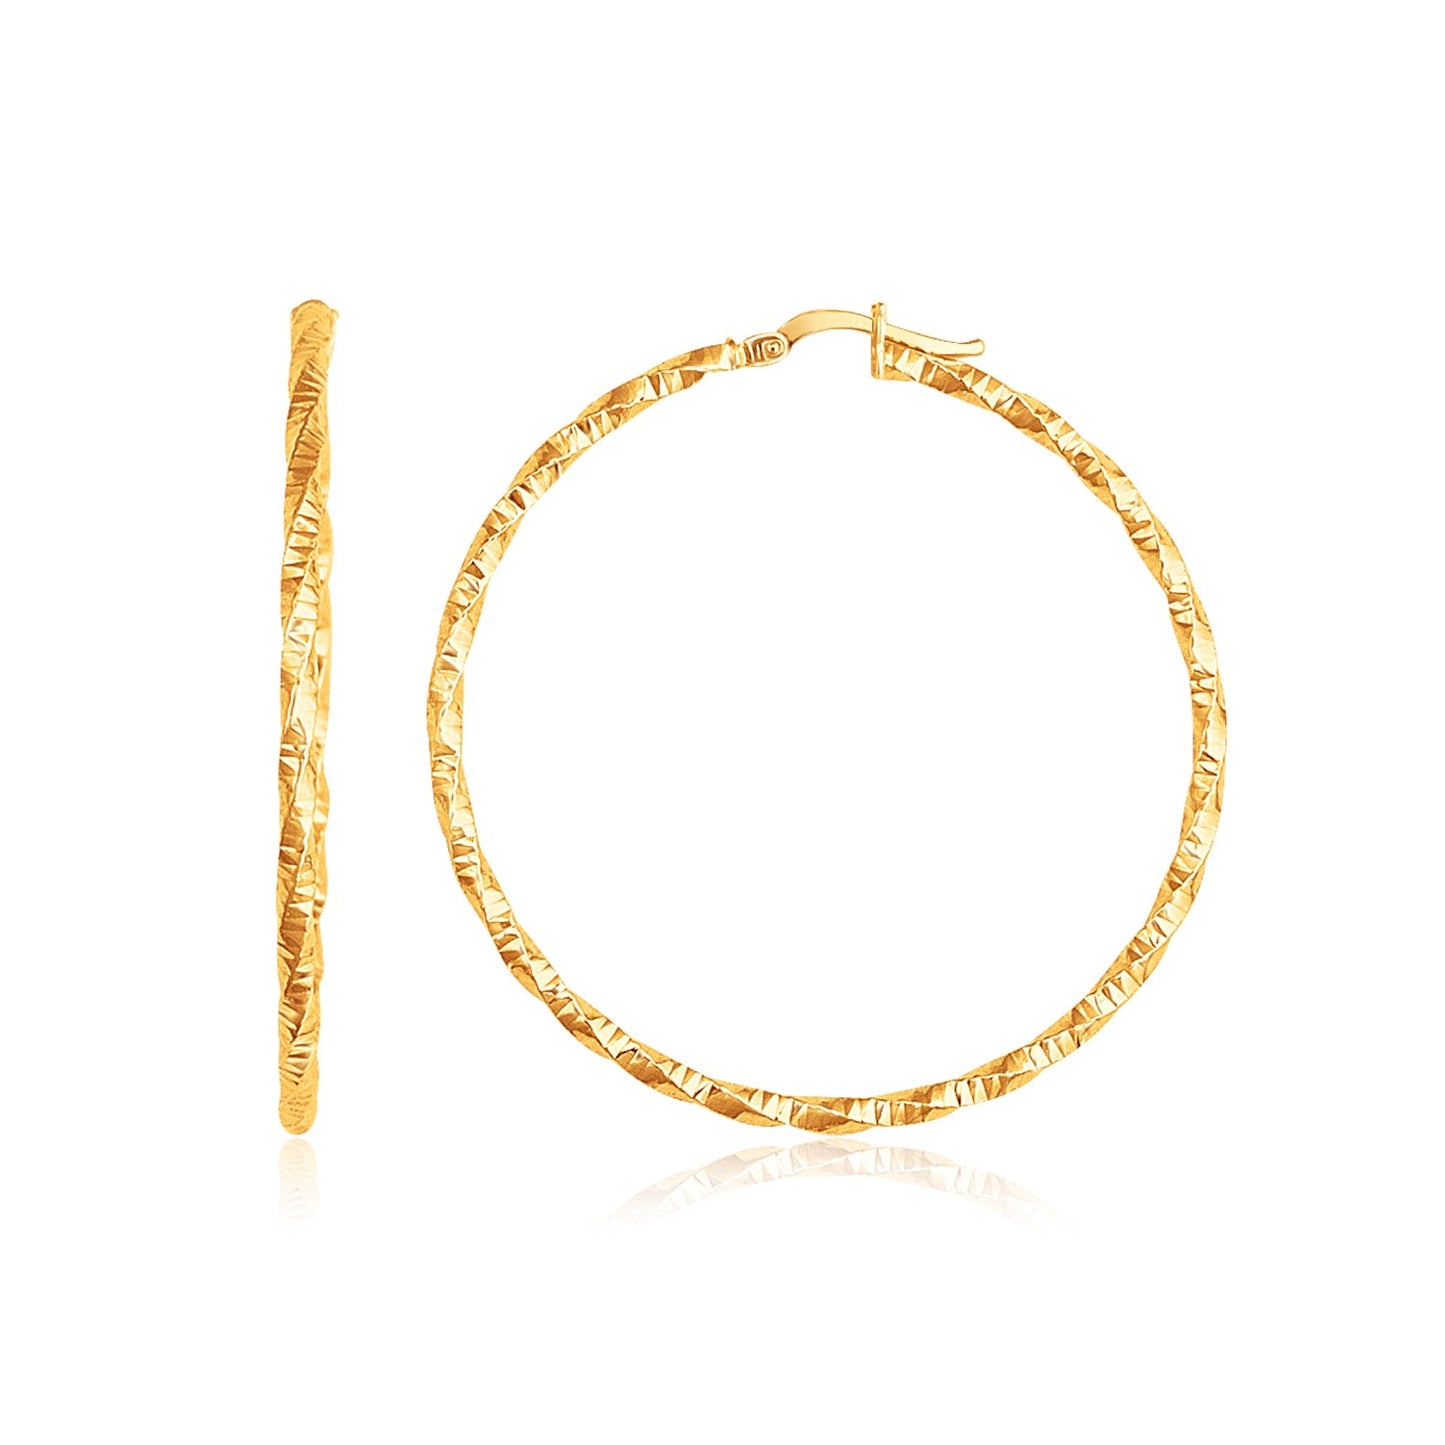 14k Yellow Gold Patterned Hoop Earrings with Twist Design